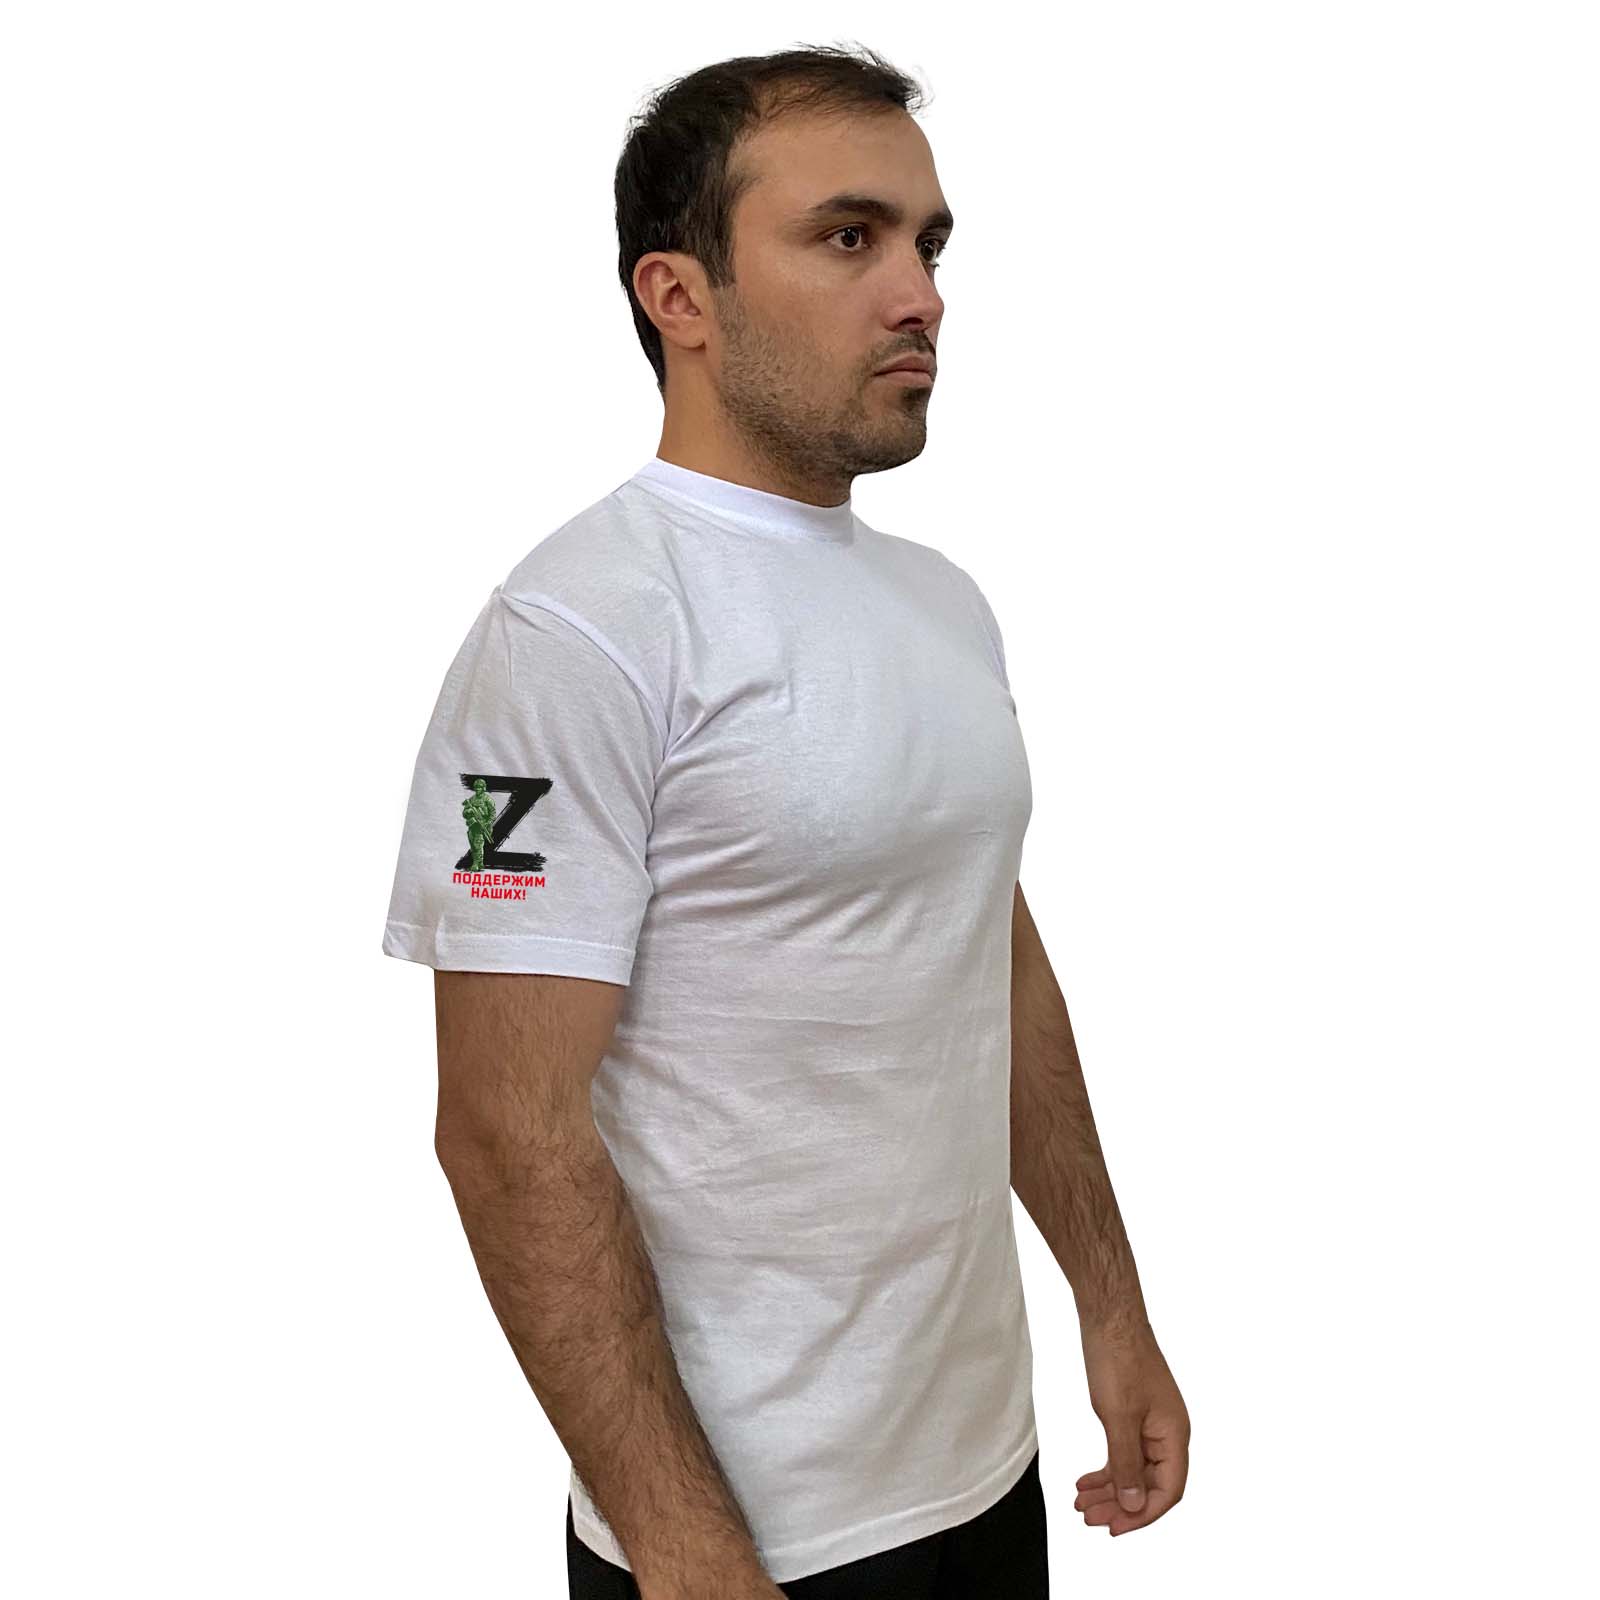 Белая футболка Z с авторским трансфером на рукаве